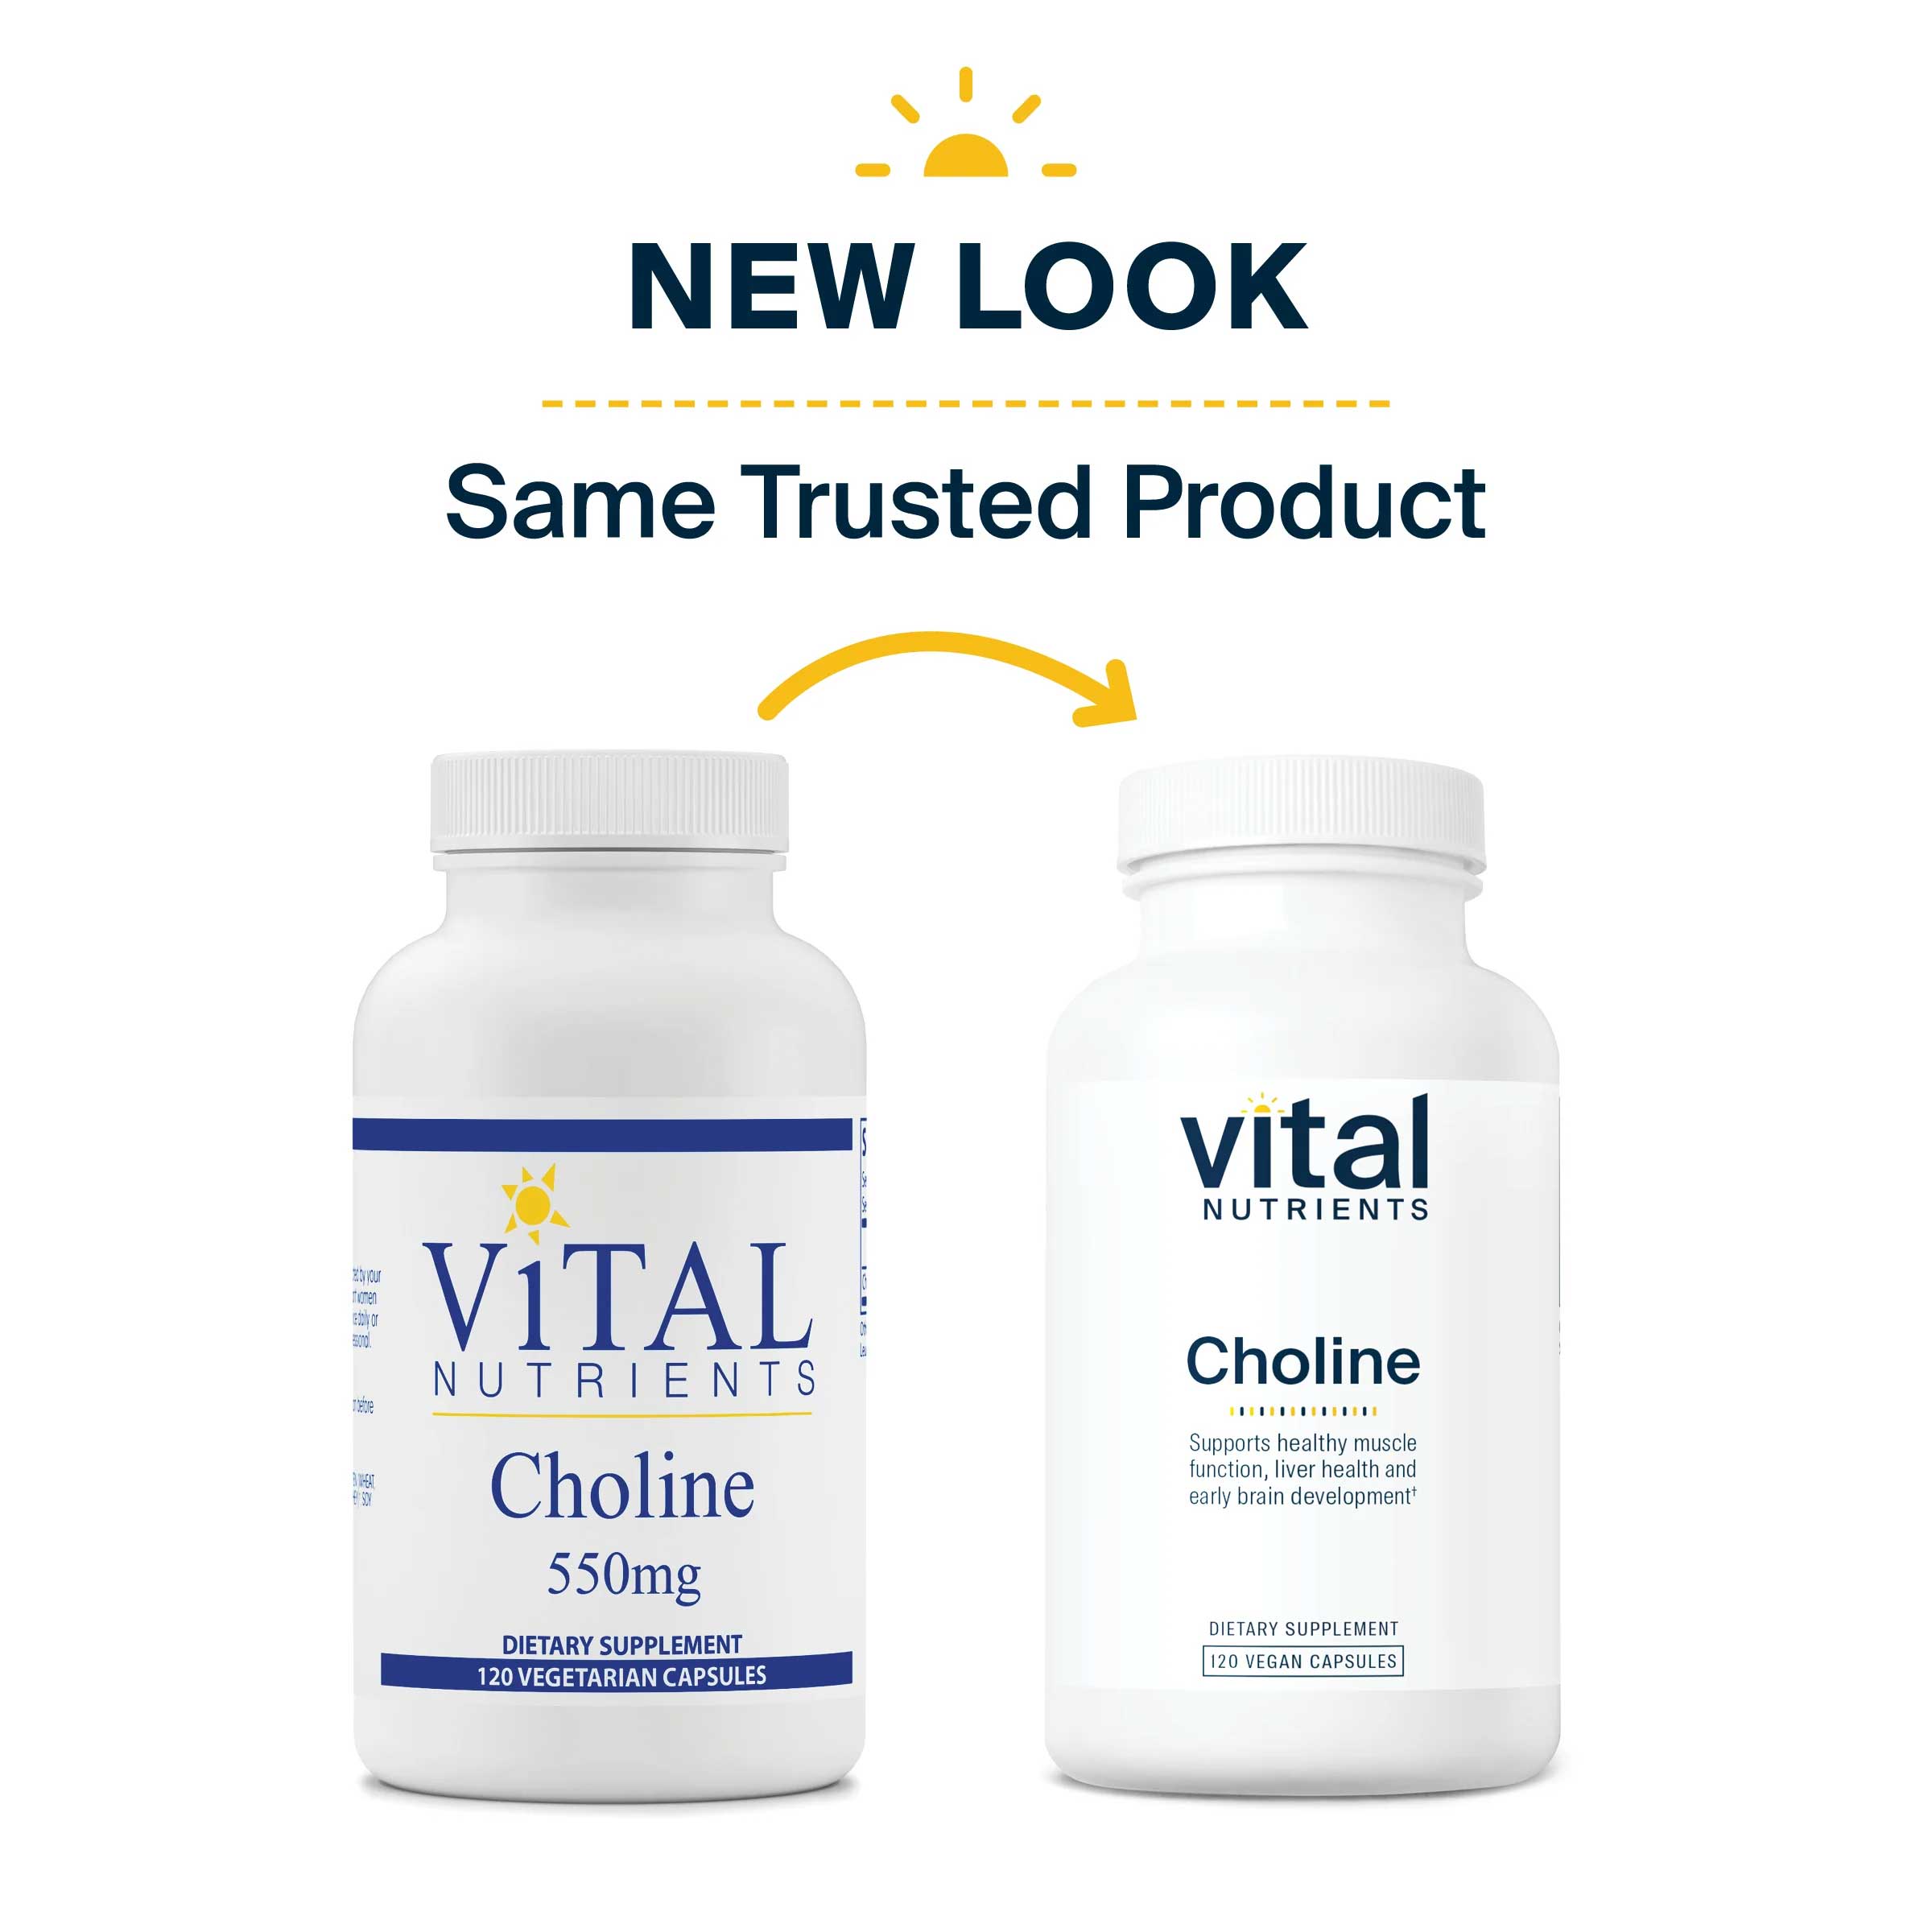 Vital Nutrients Choline 550mg New Look